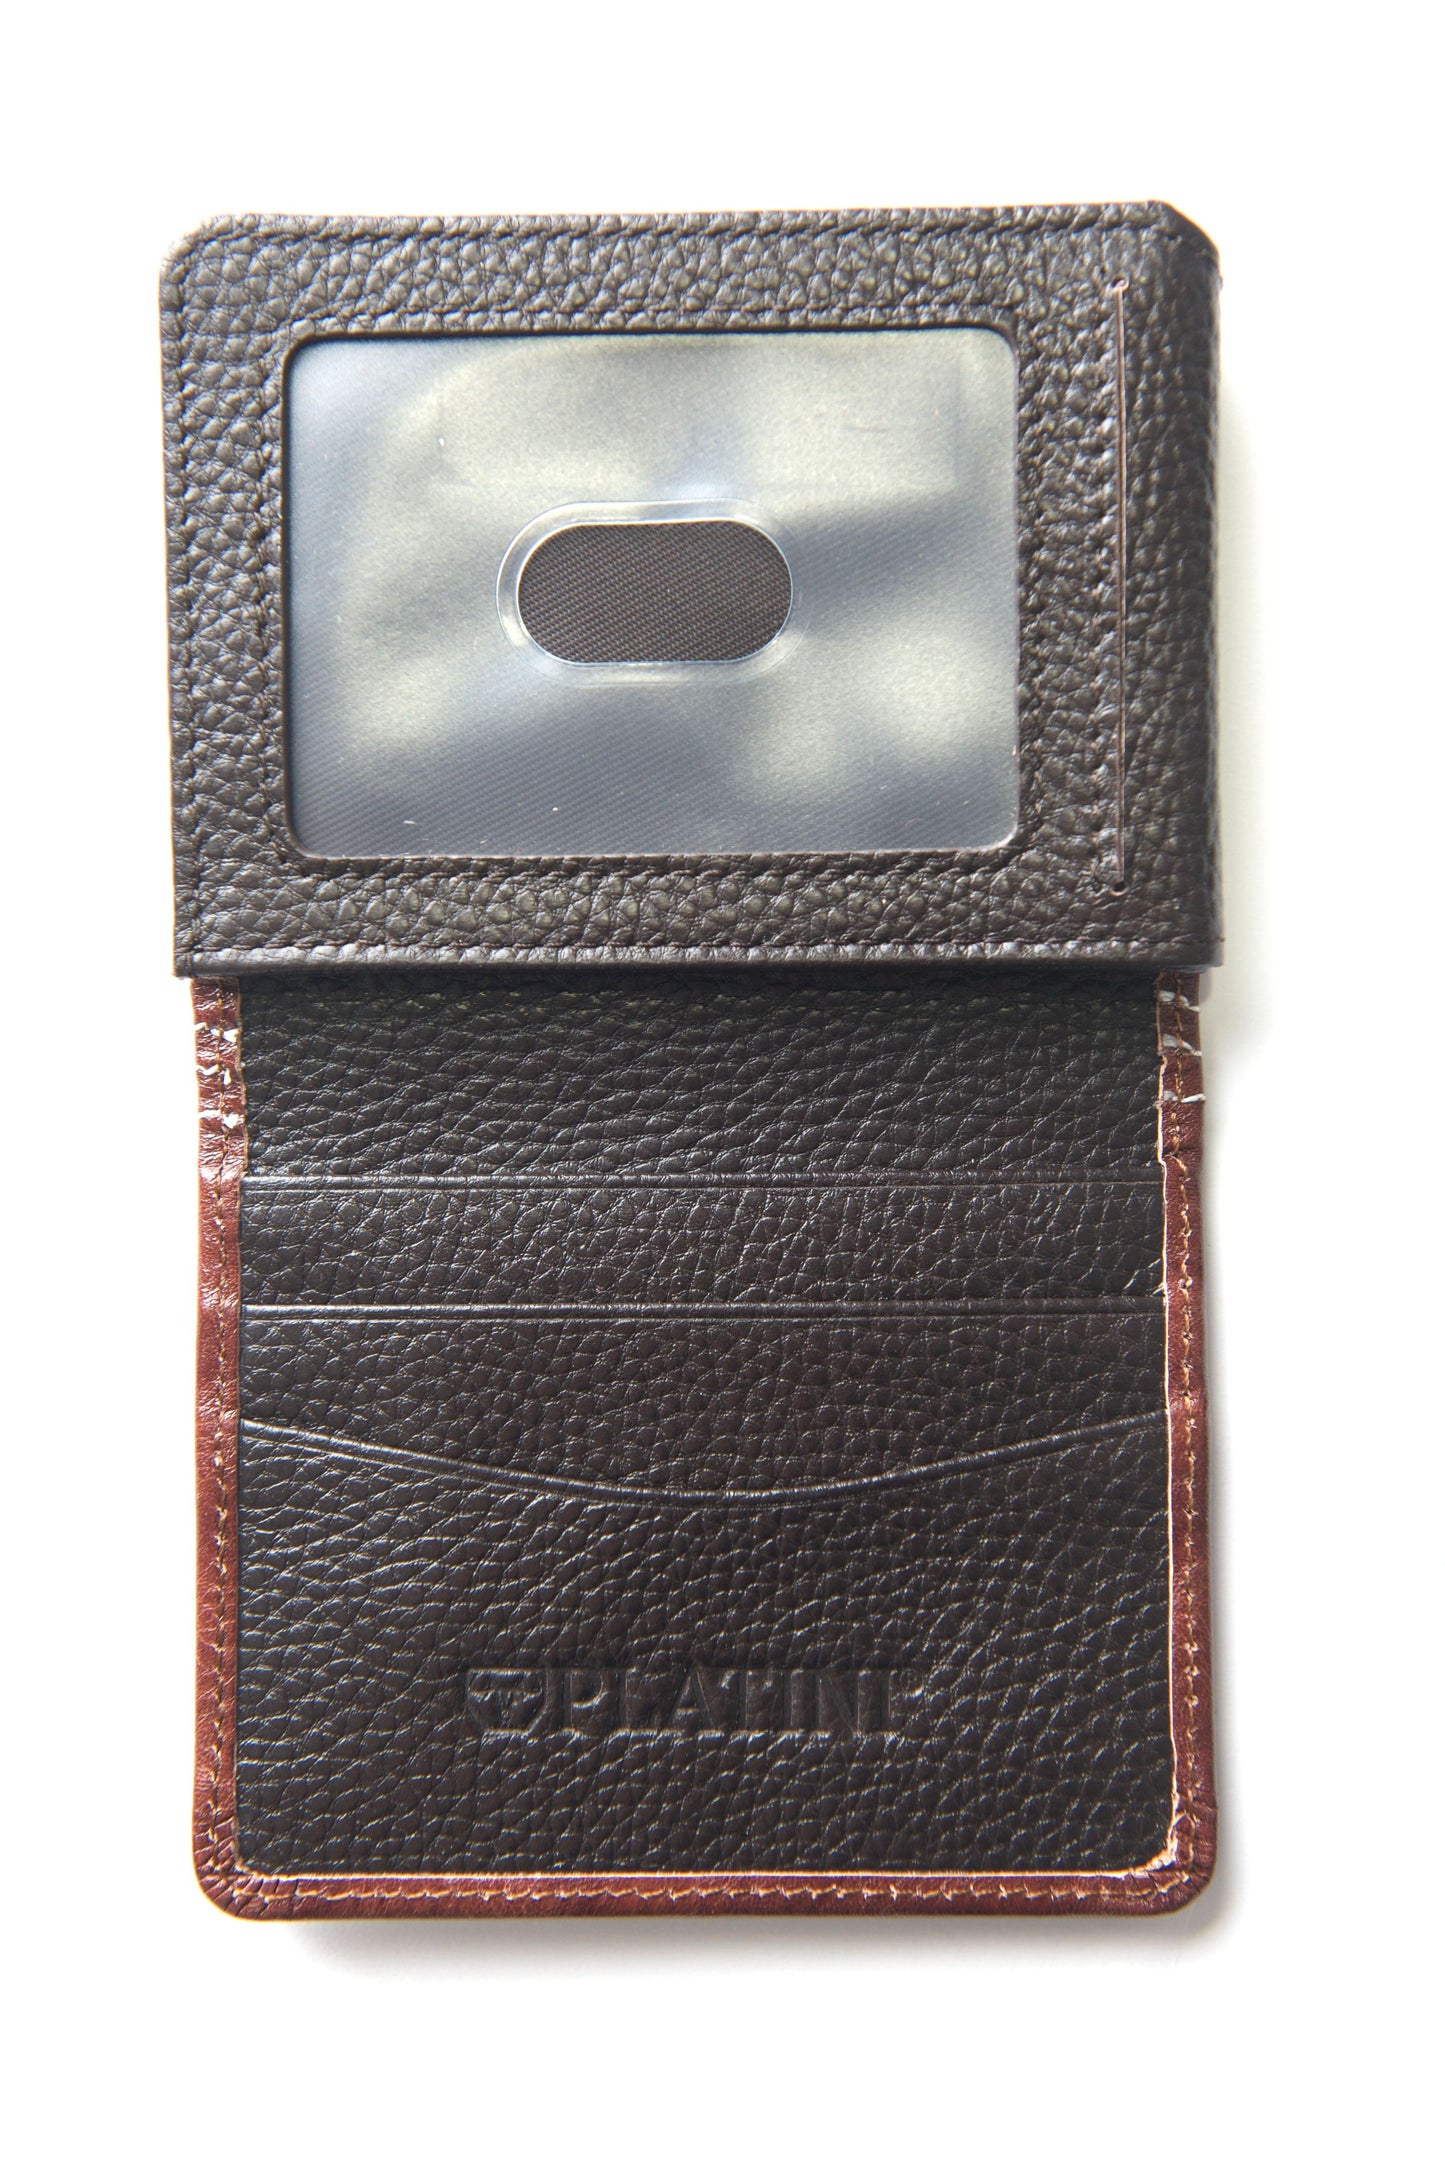 Men's Genuine Leather Wallets - Brown